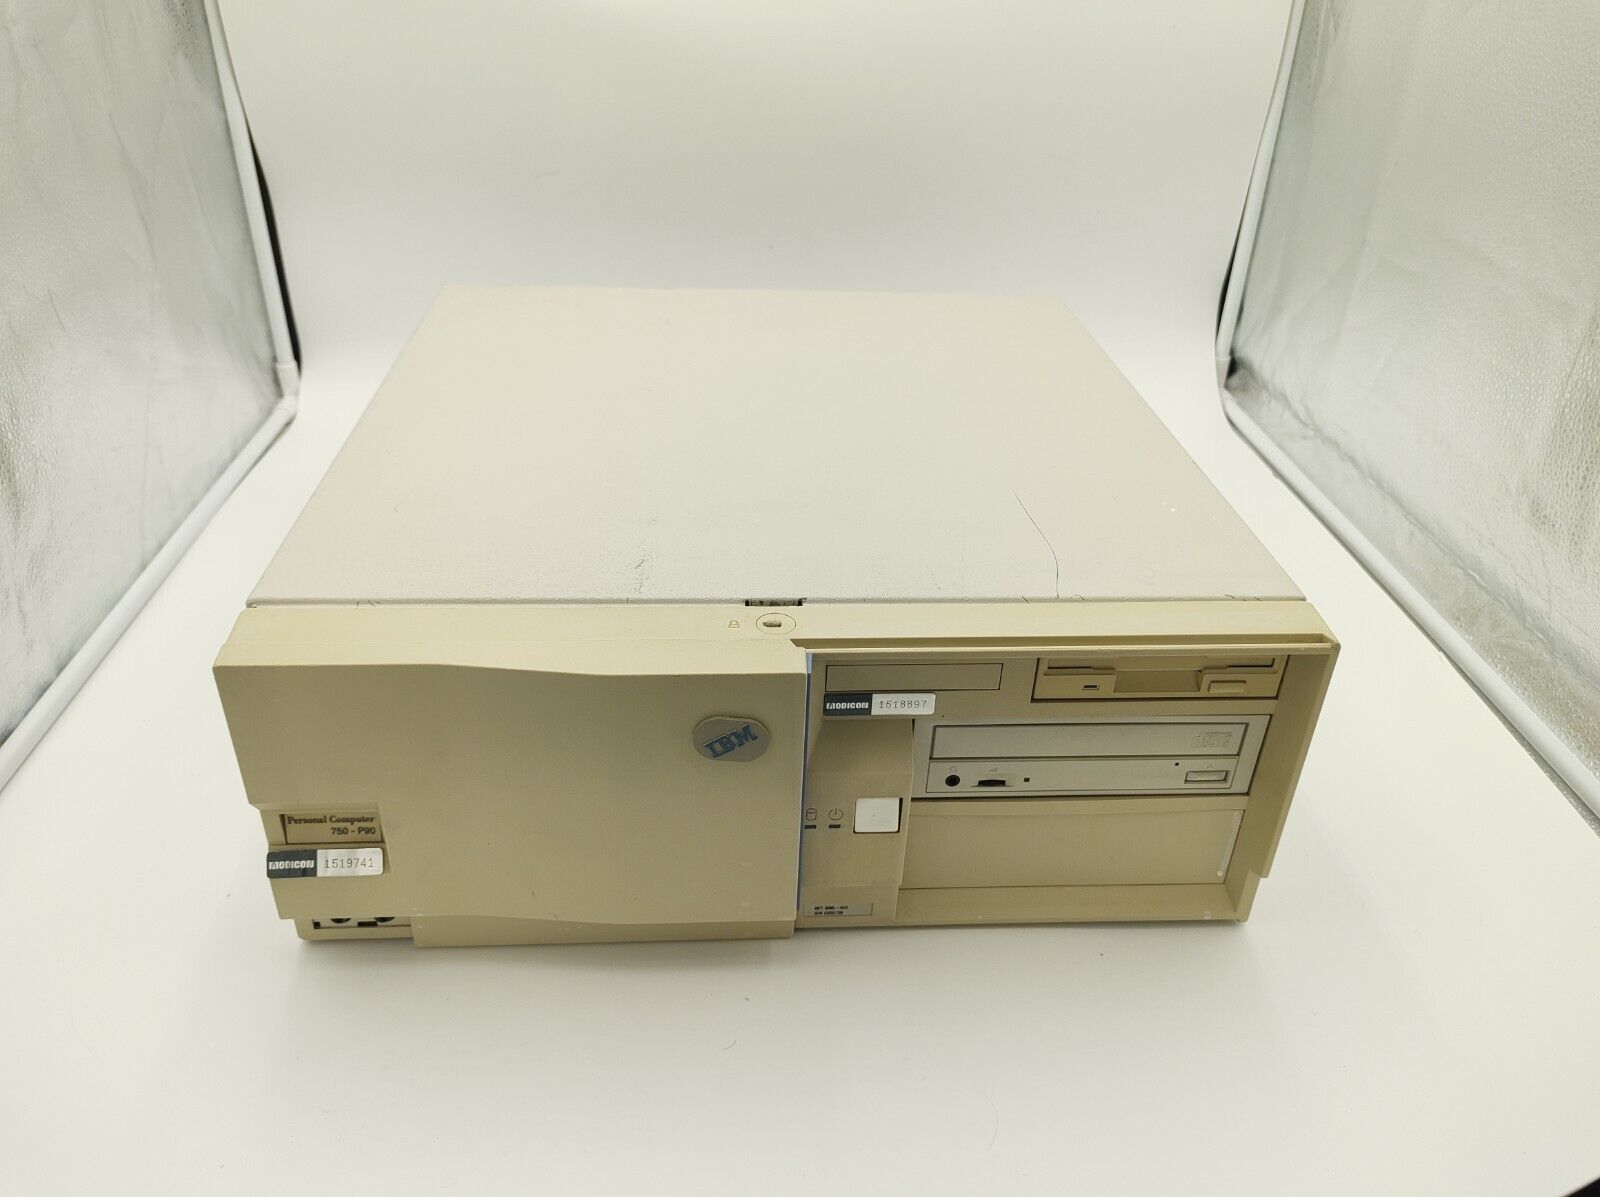 IBM PC 750-P90 Pentium 90mhz, 16mb ram, 1.7gb hdd, Floppy, CD-Rom, DOS 6.22